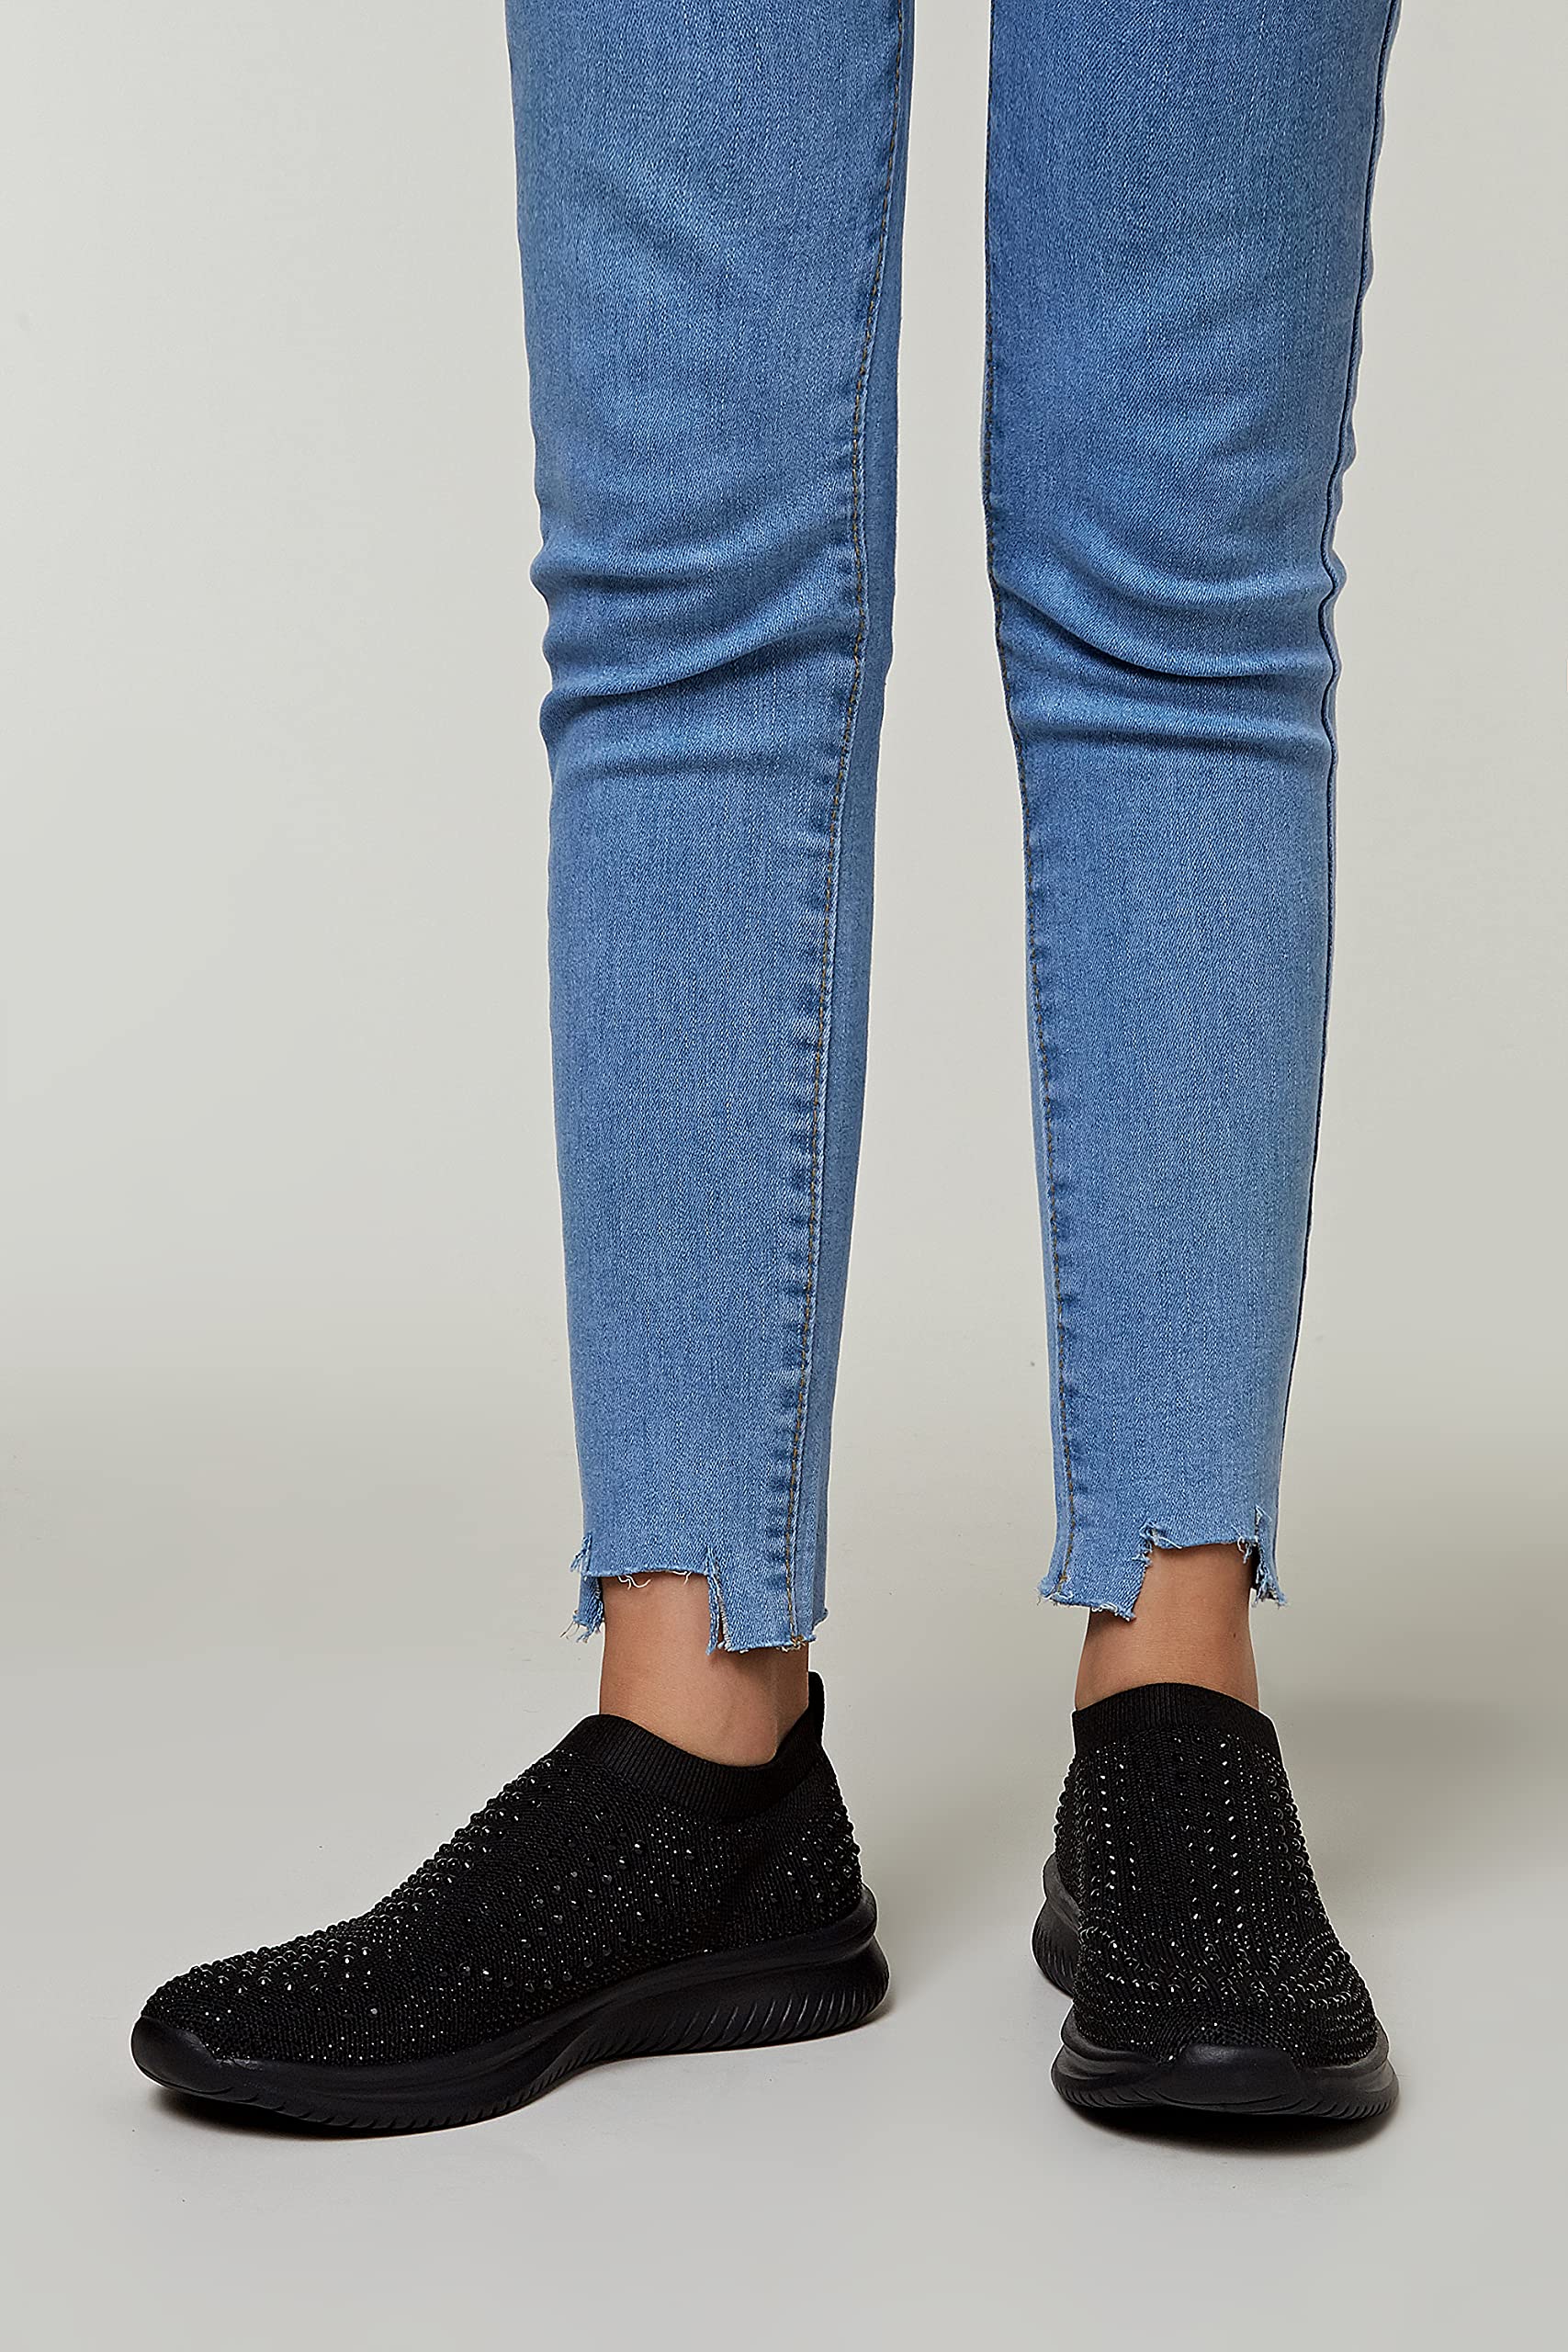 BELOS Women's Rhinestone Slip On Walking Shoes Breathable Mesh Knit Sock Shoes Fashion Comfortable Sparkly Sneaker(Black,10)